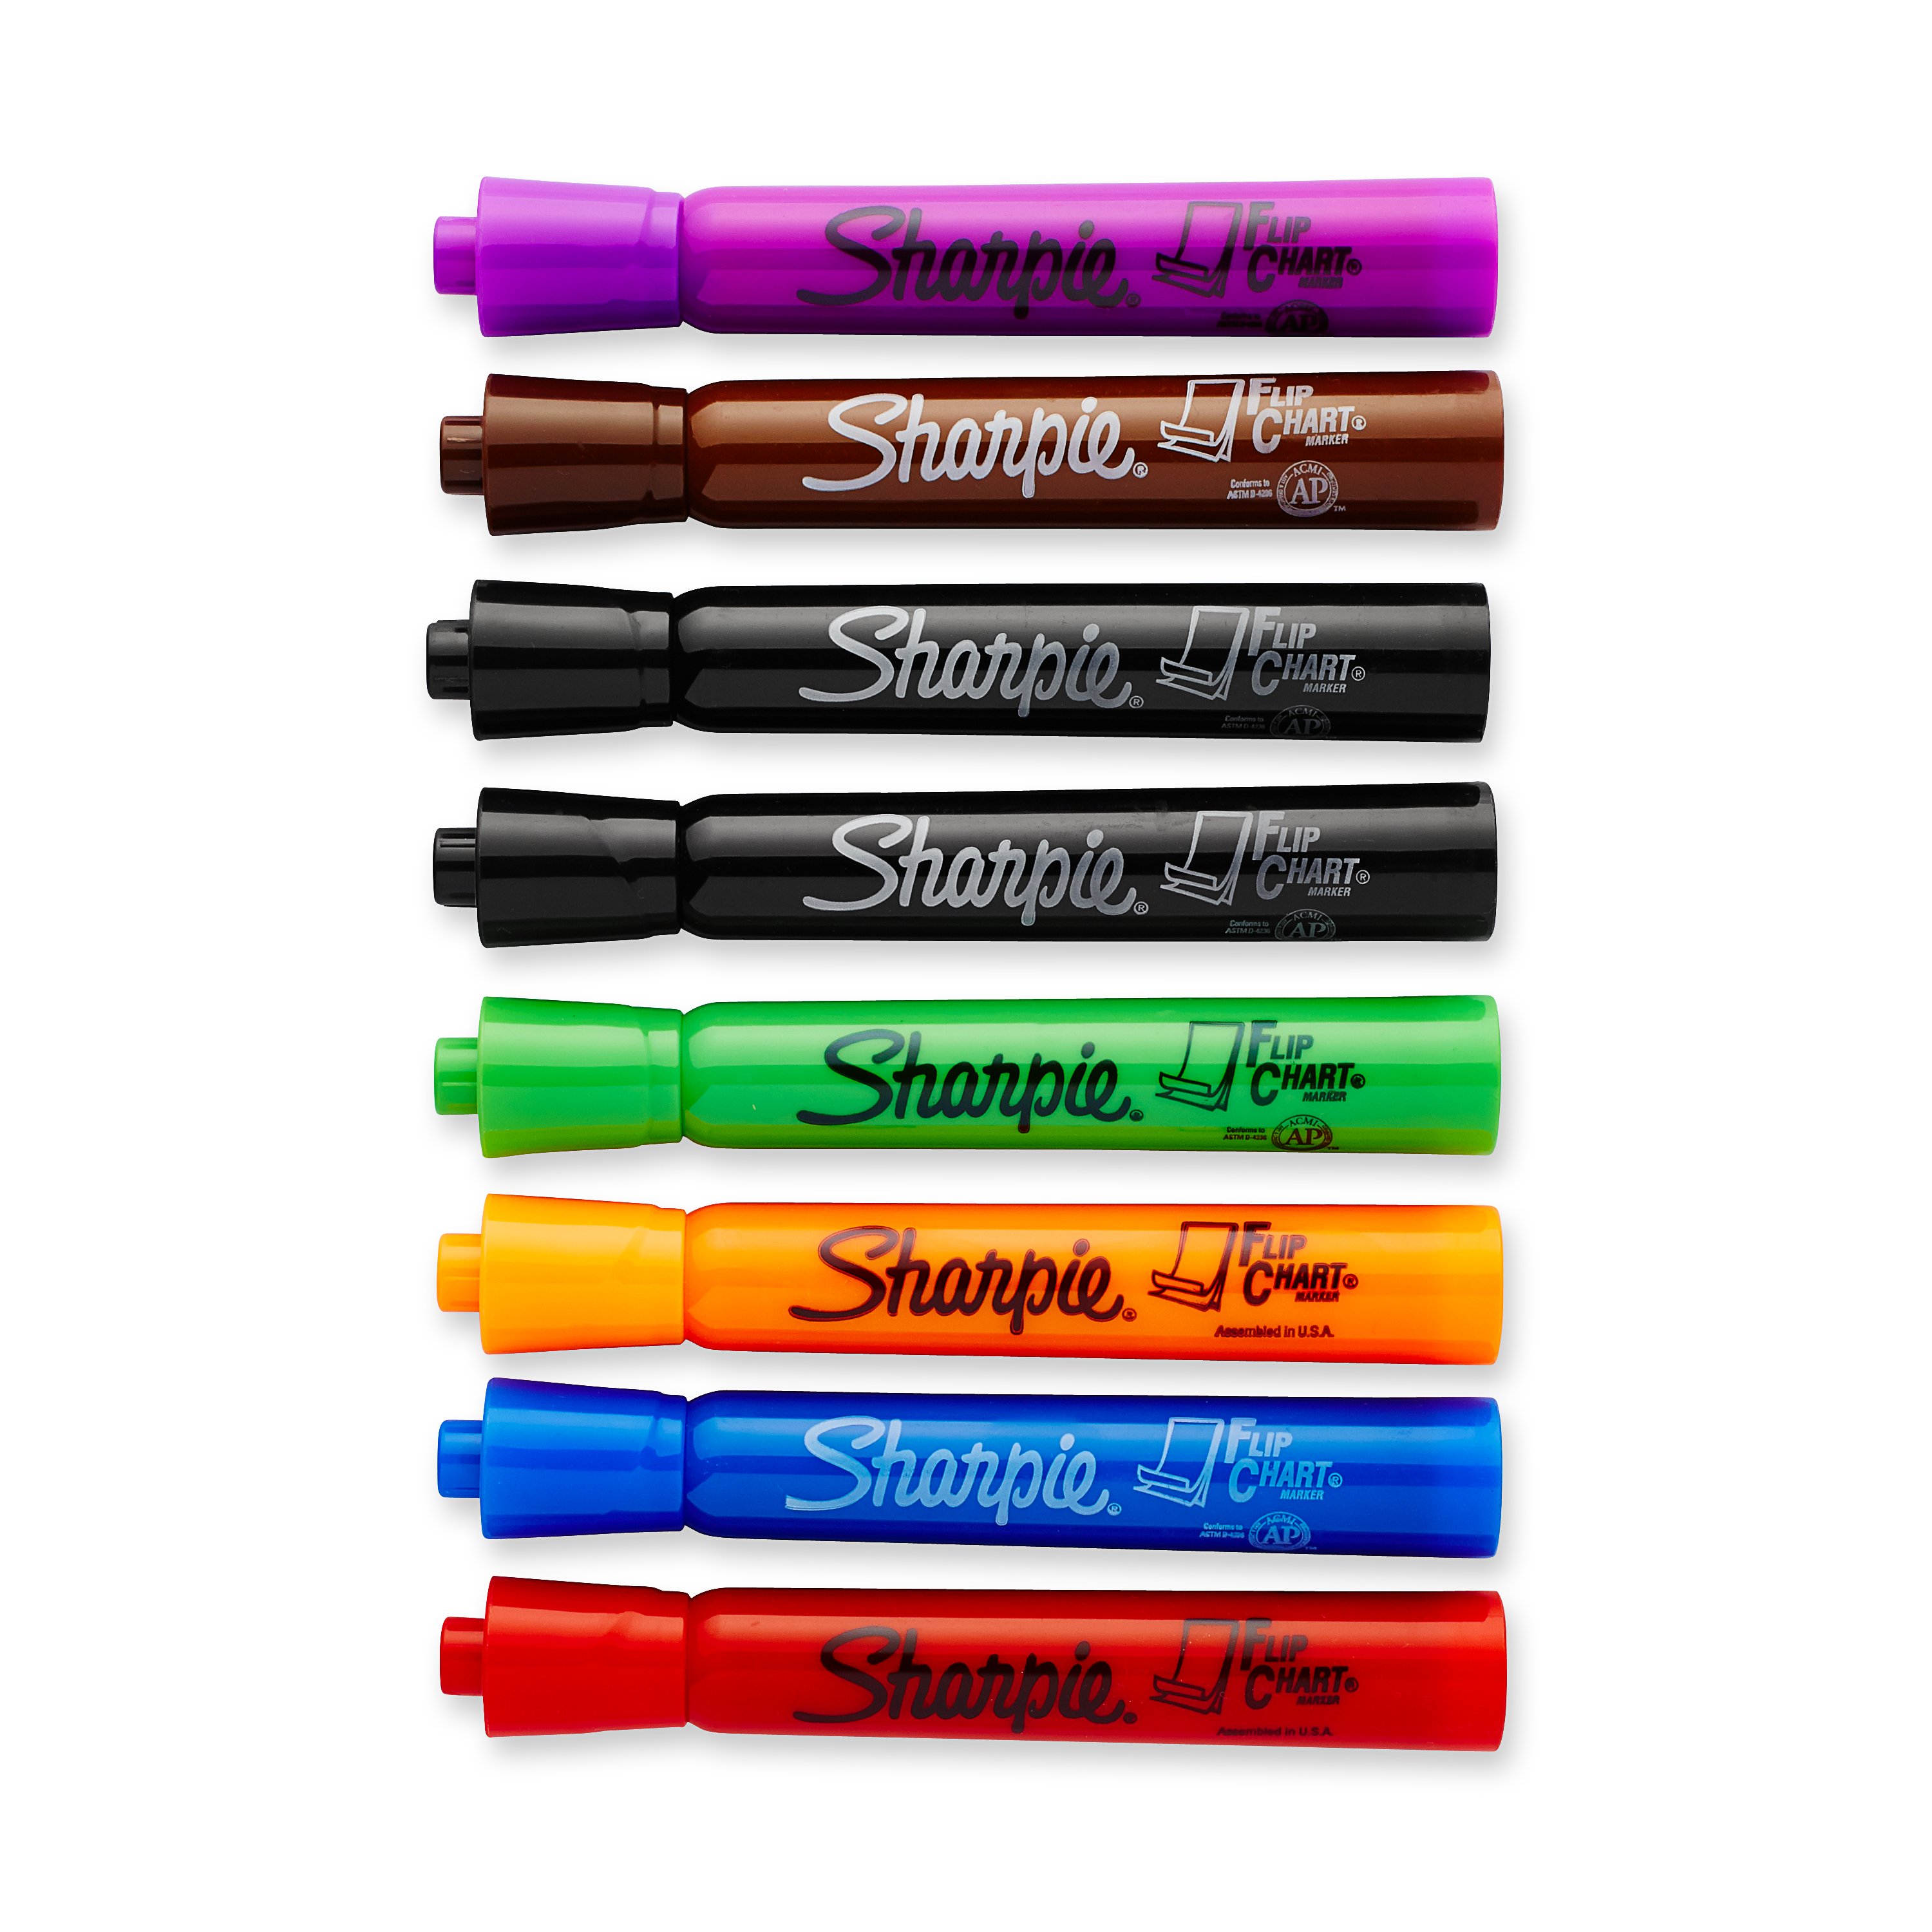 Great Value, Sharpie® Flip Chart Marker, Broad Bullet Tip, Assorted Colors,  4/Set by Sanford